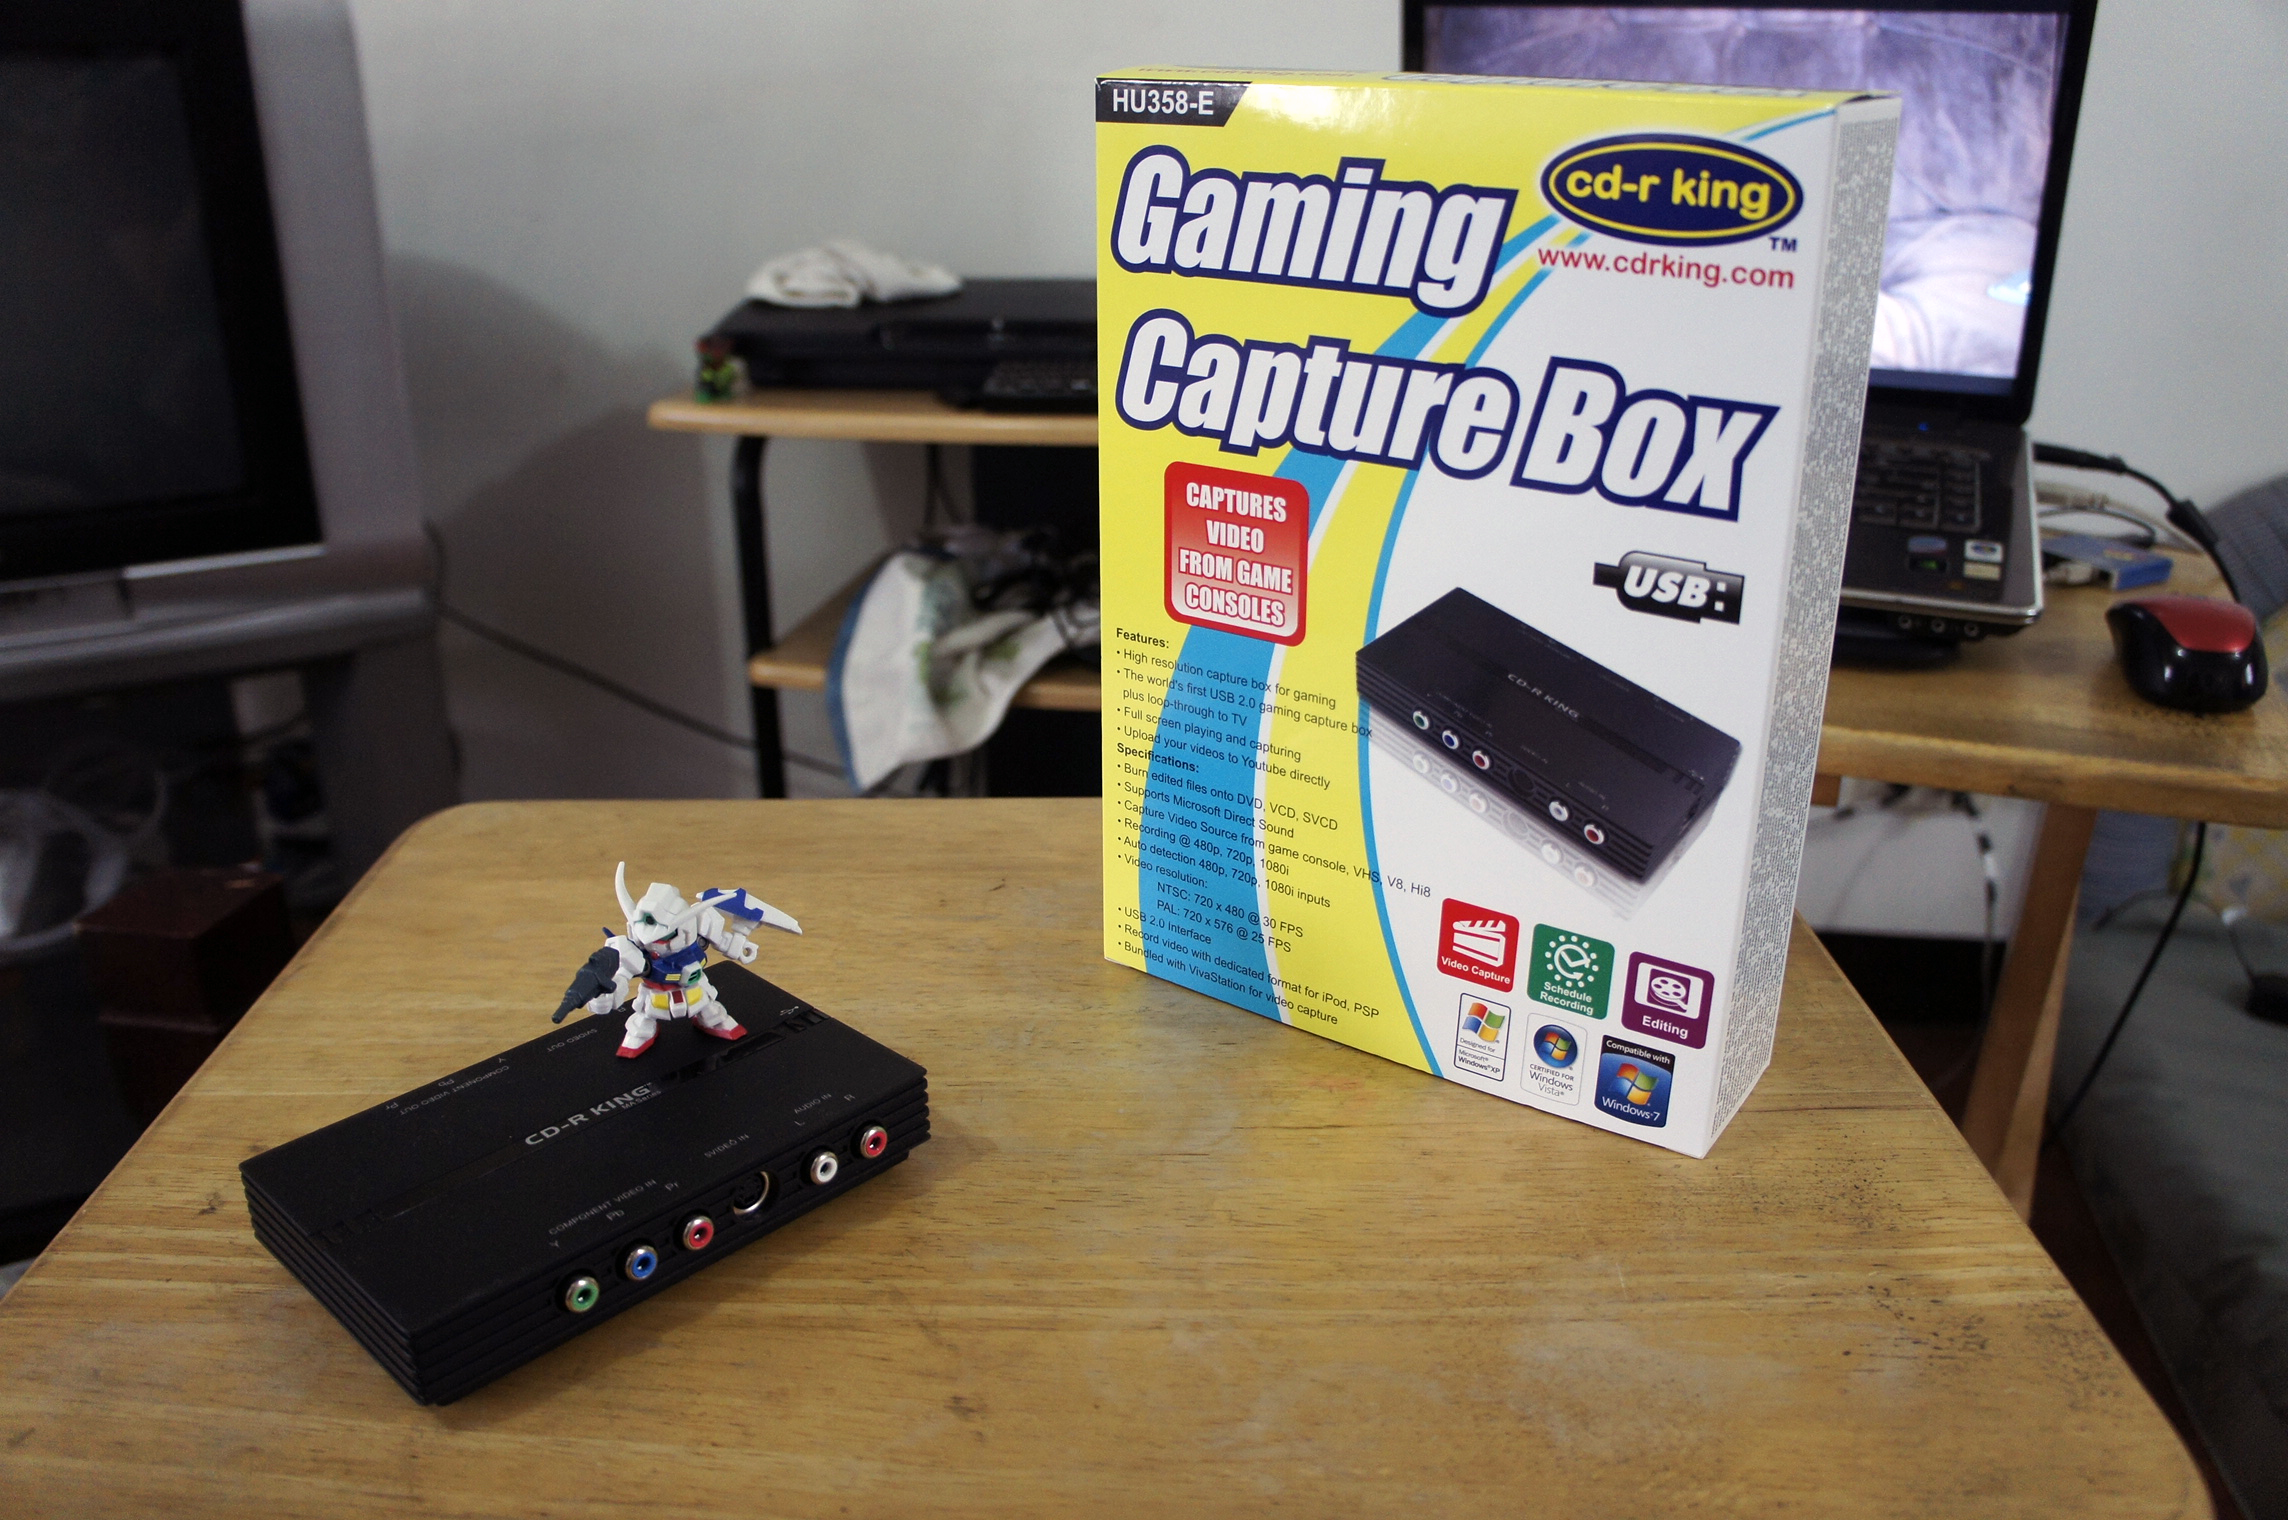 CD-RKing Gaming Capture Box